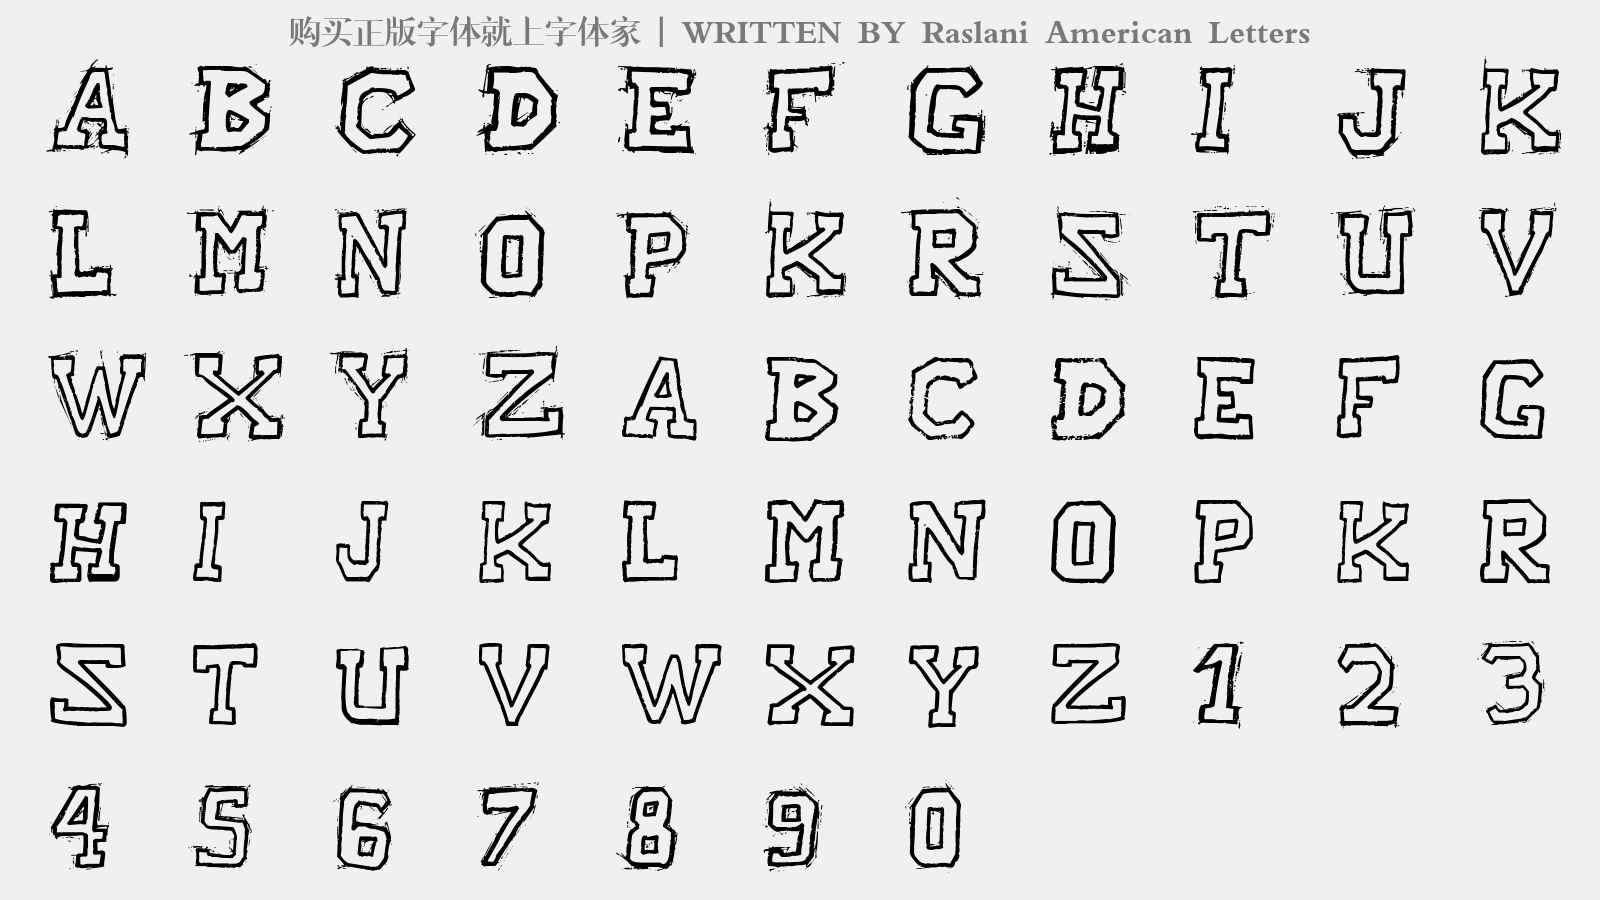 Raslani American Letters - 大写字母/小写字母/数字